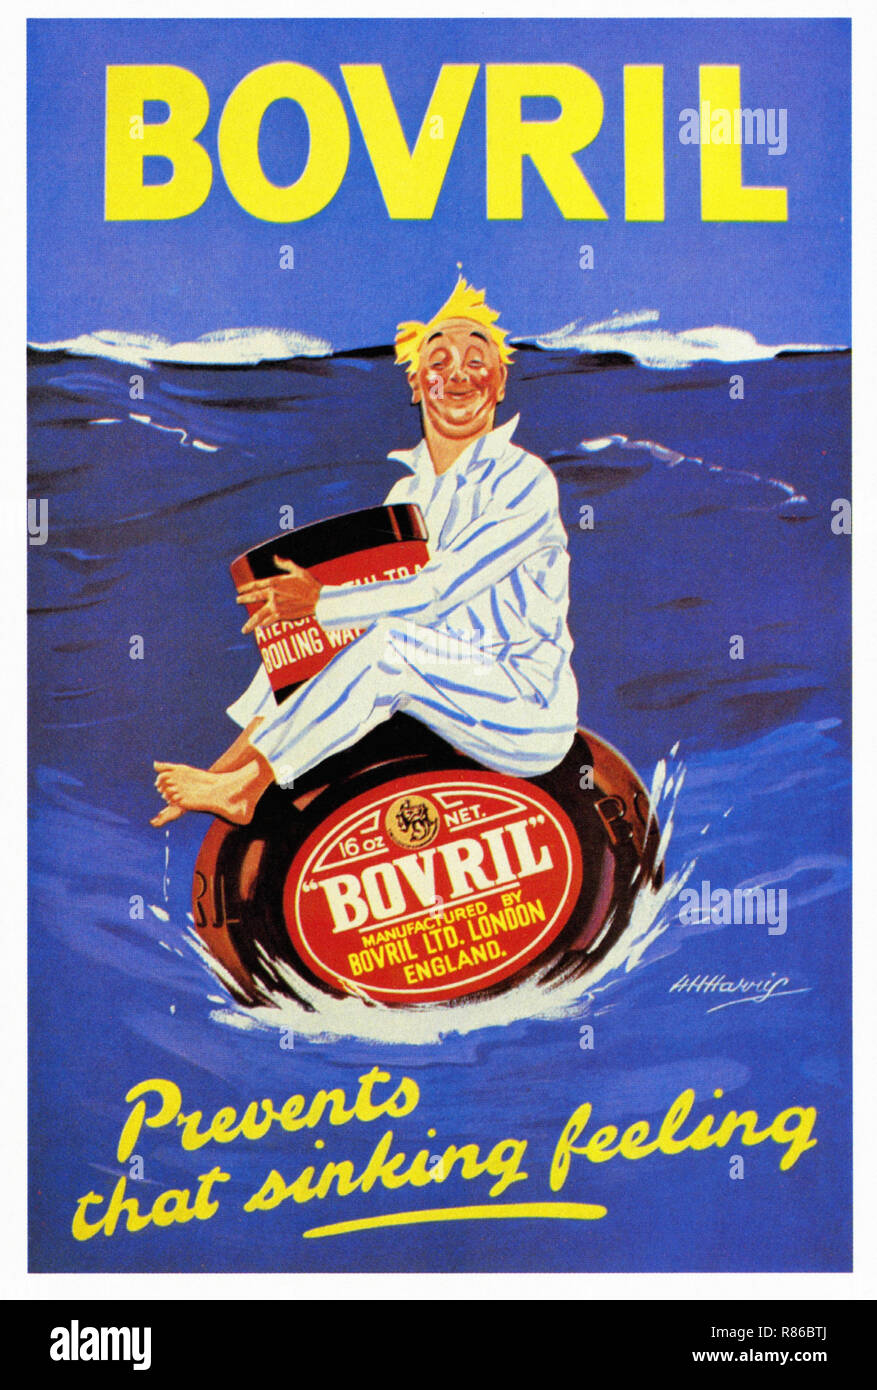 Bovril Prevents That Sinking Feeling Vintage Advertising